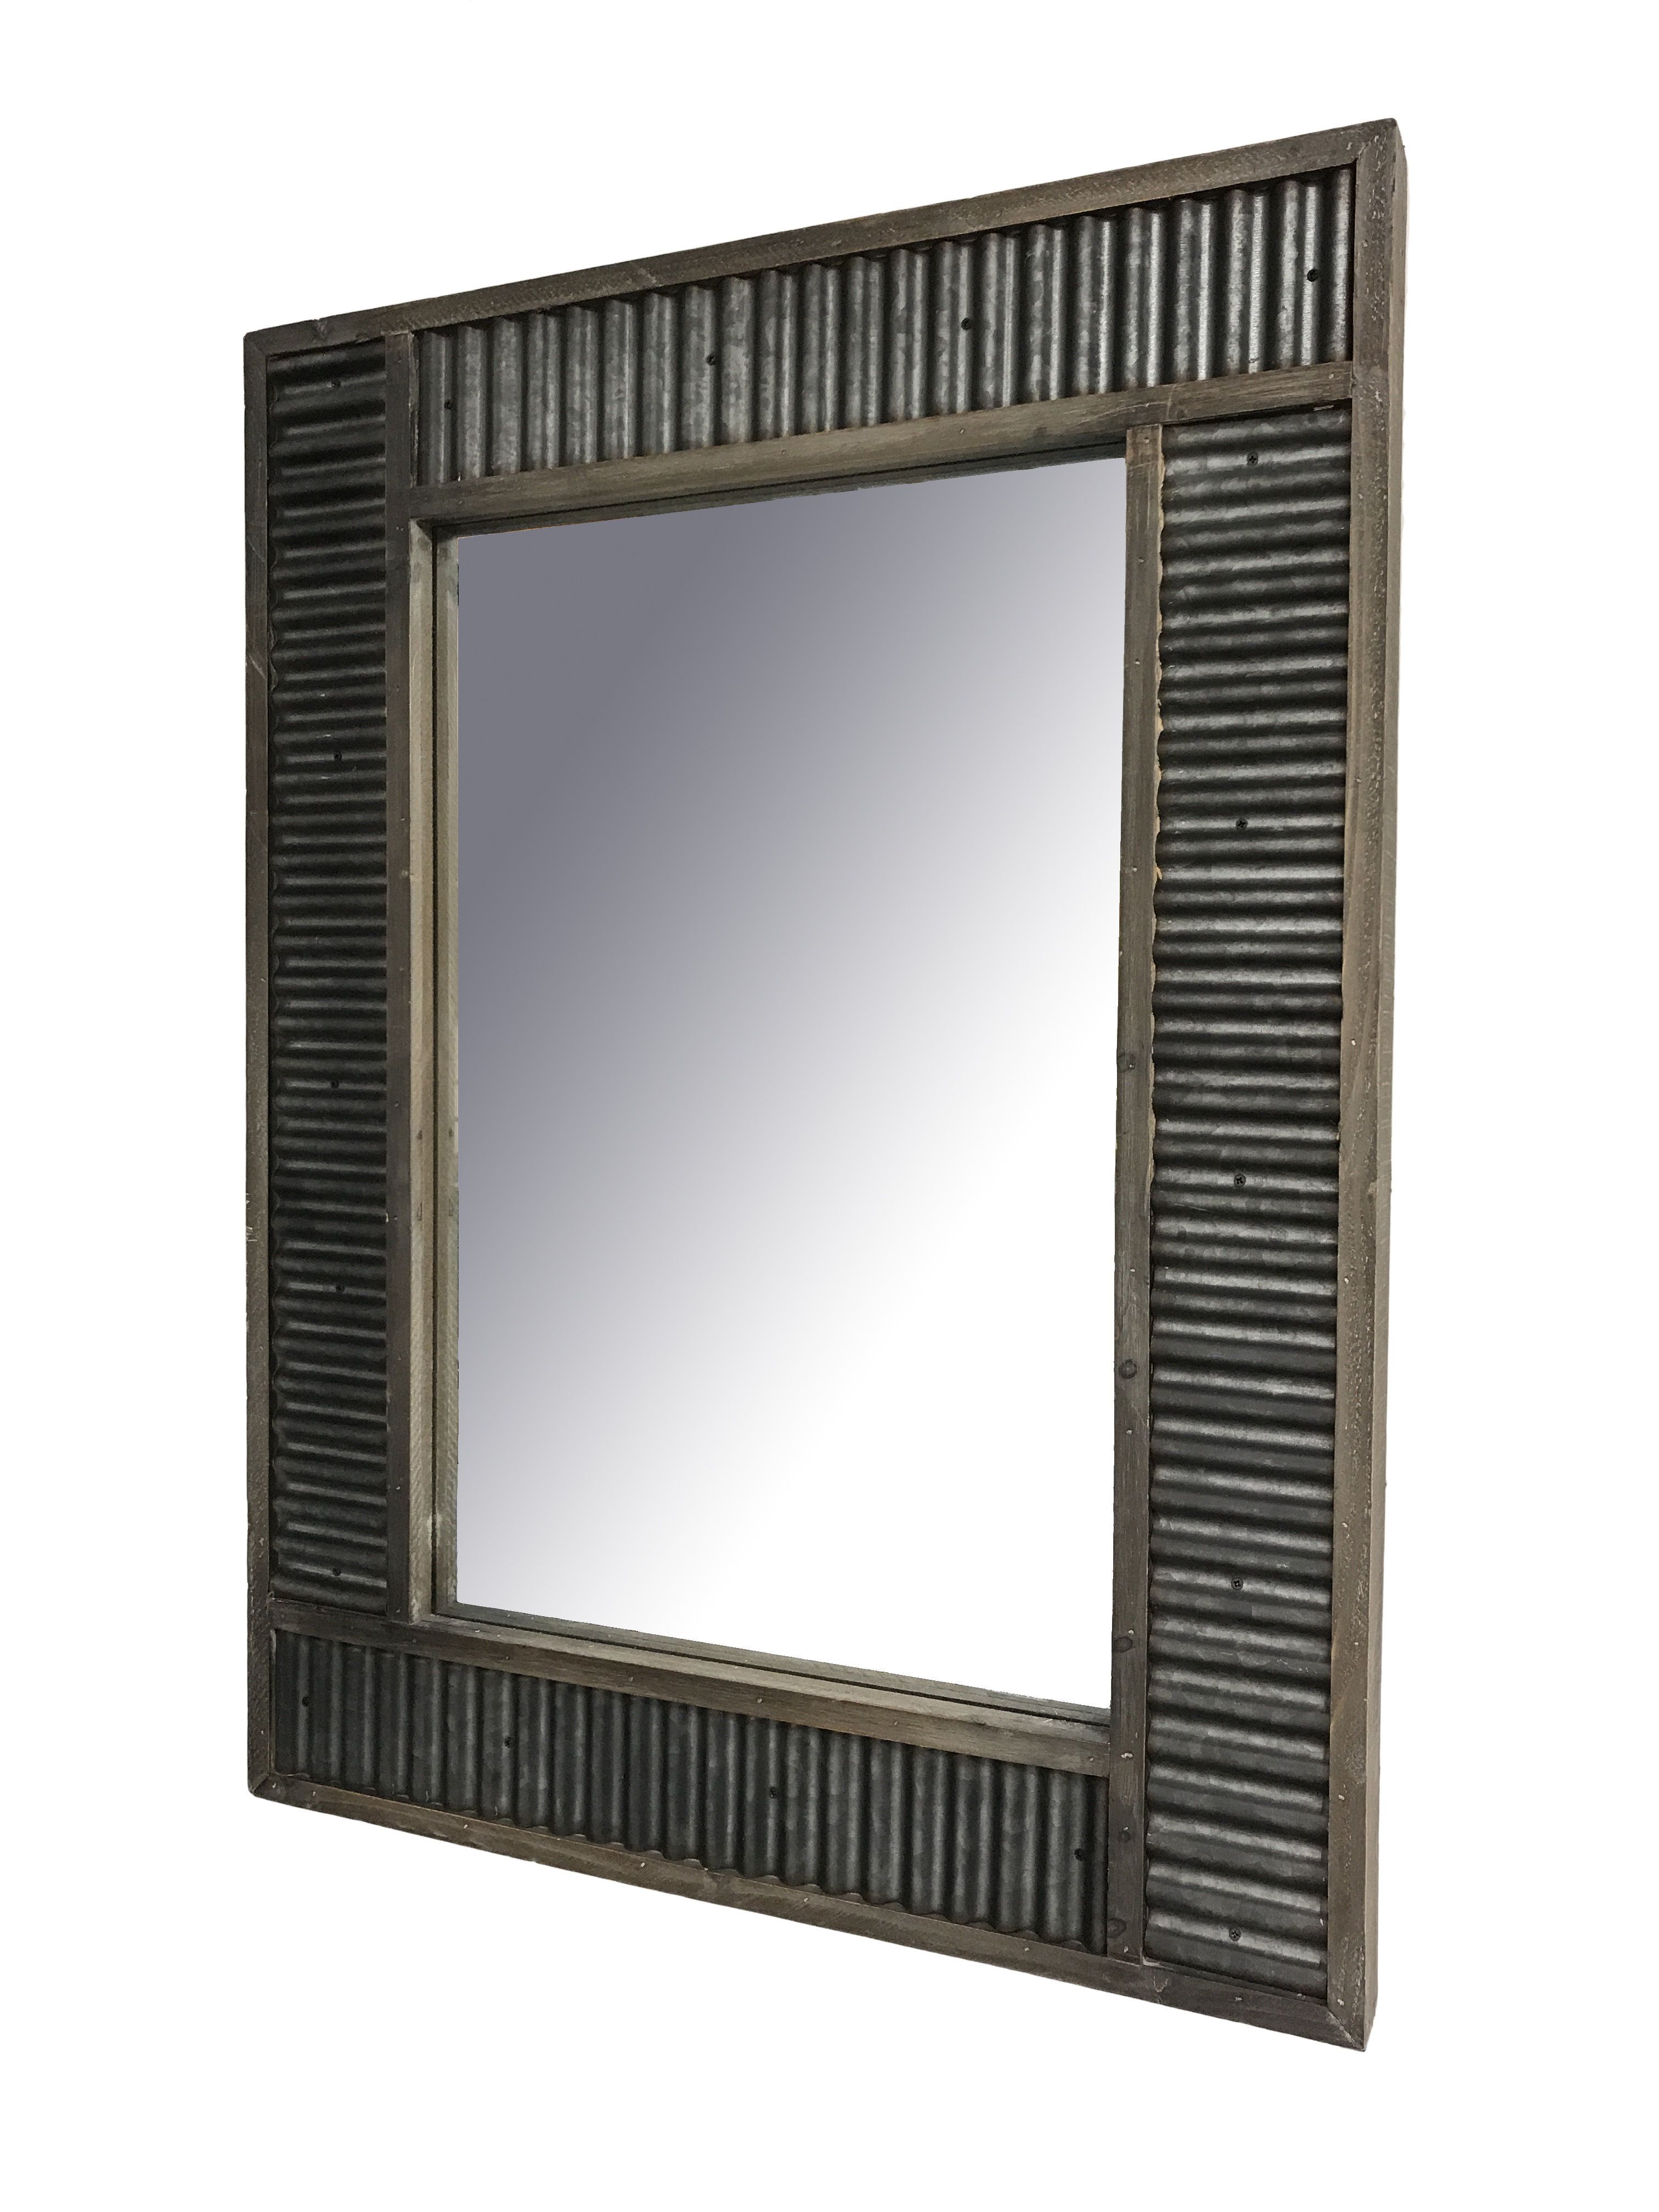 Rustic Wood Framed Mirror | Wayfair Inside Padang Irregular Wood Framed Wall Mirrors (View 20 of 20)